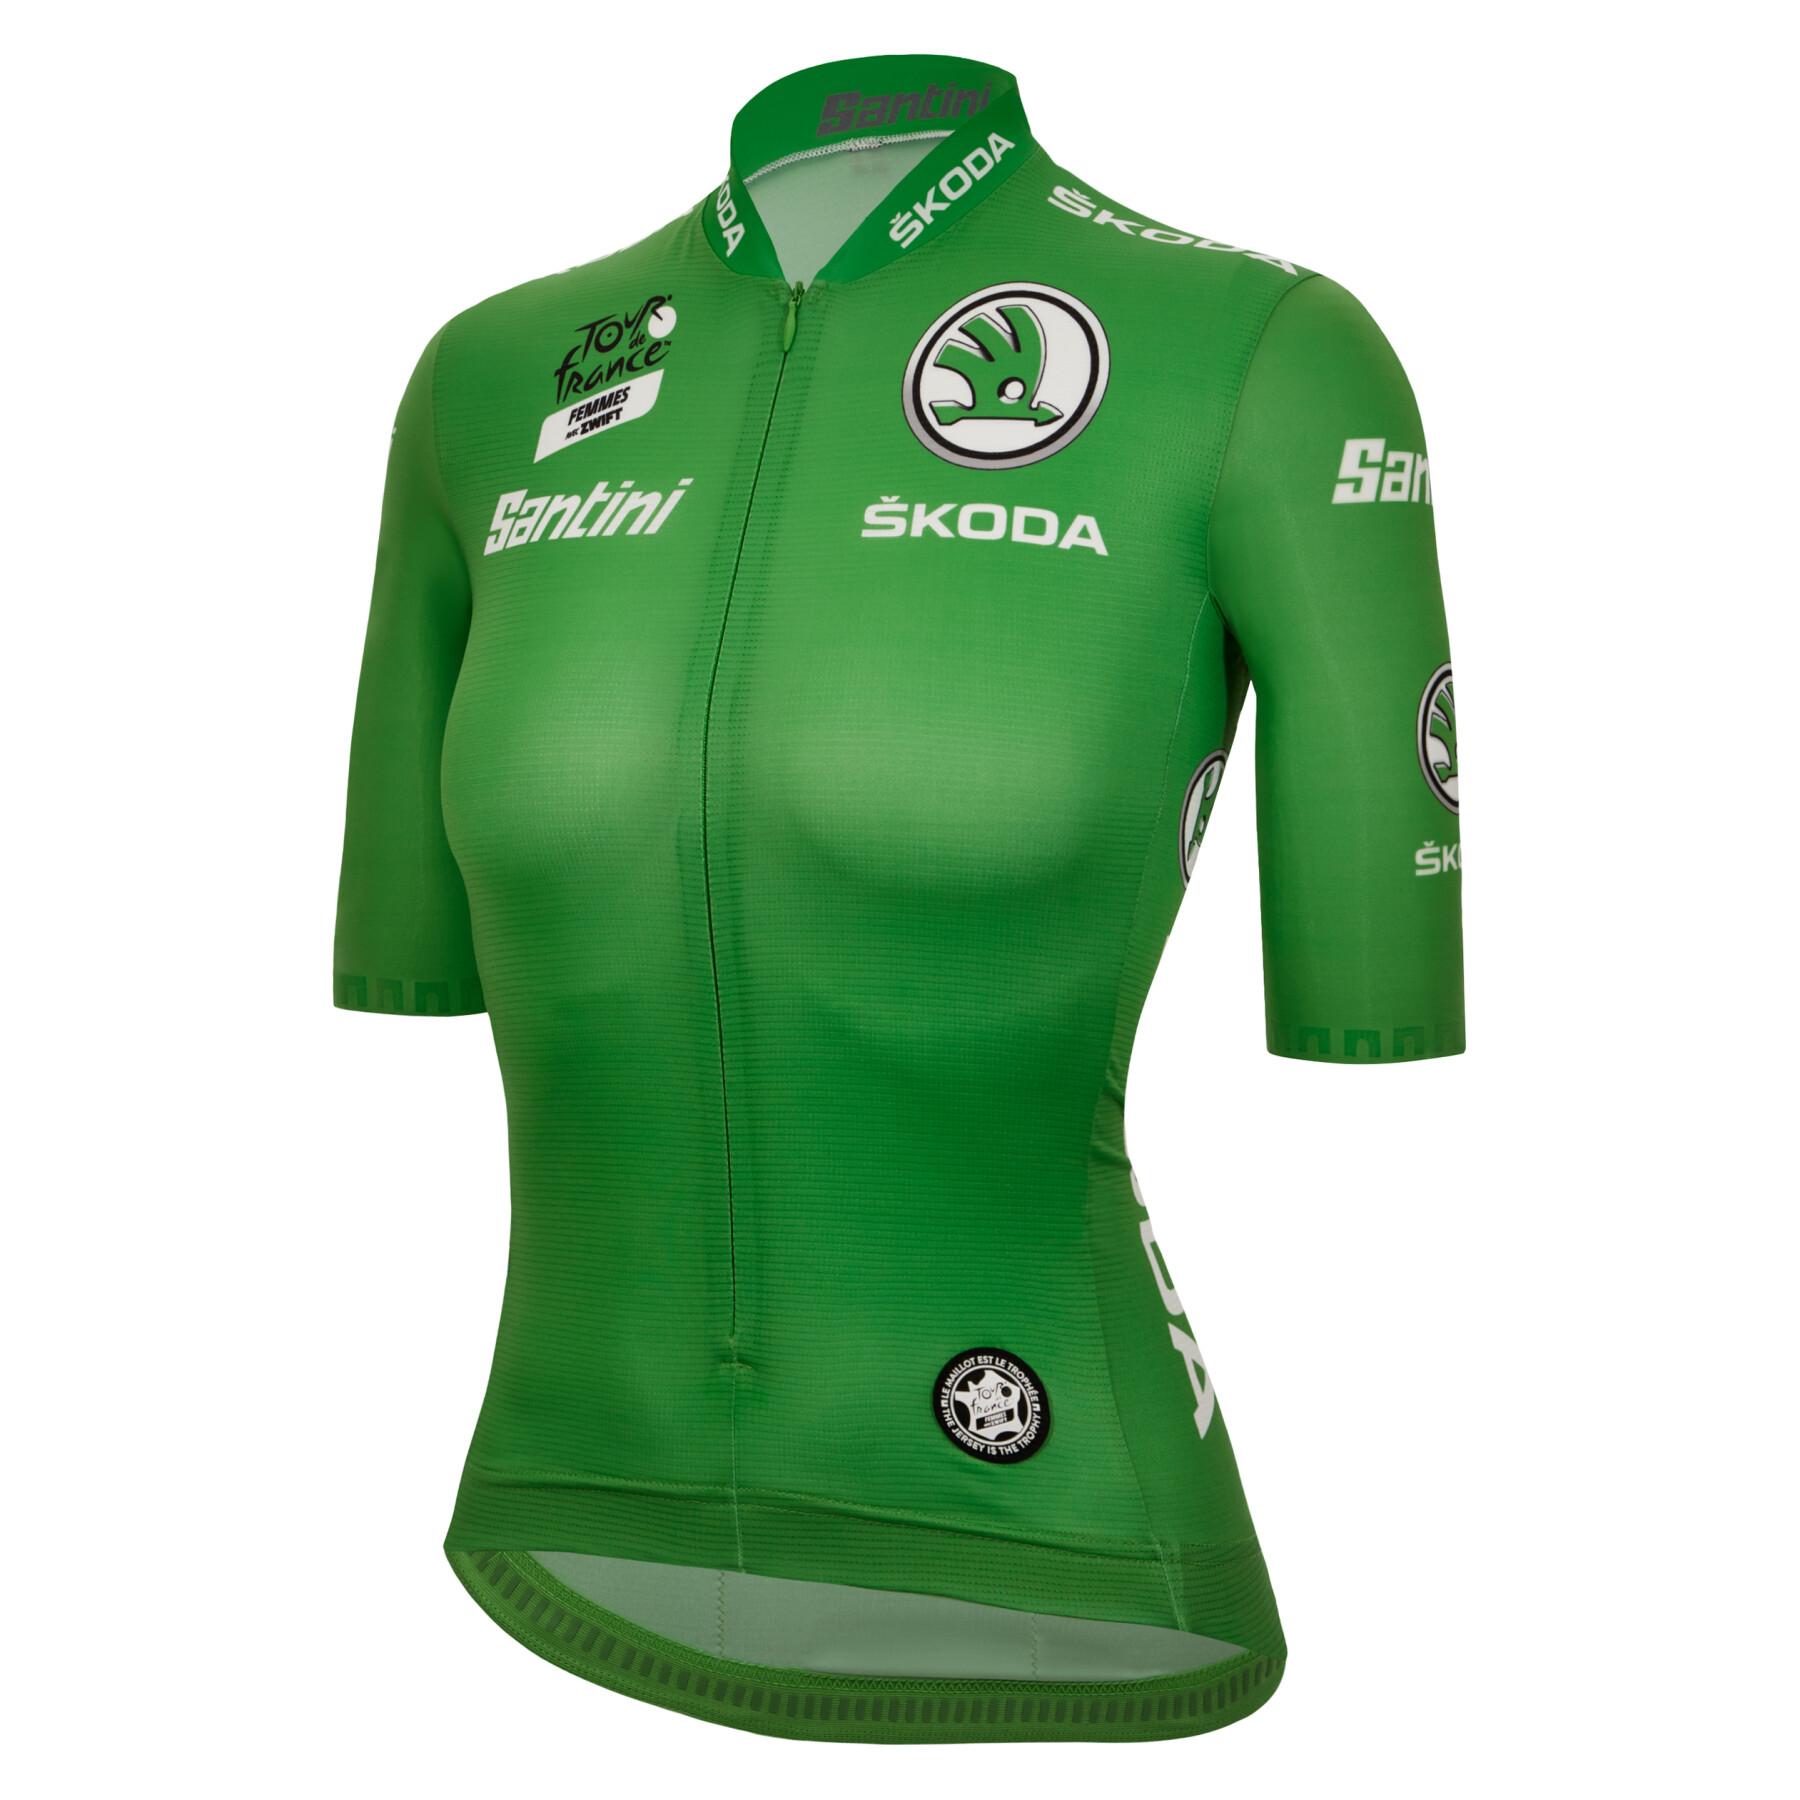 Mejor Camiseta de sprinter femenino Santini Tour de Francia